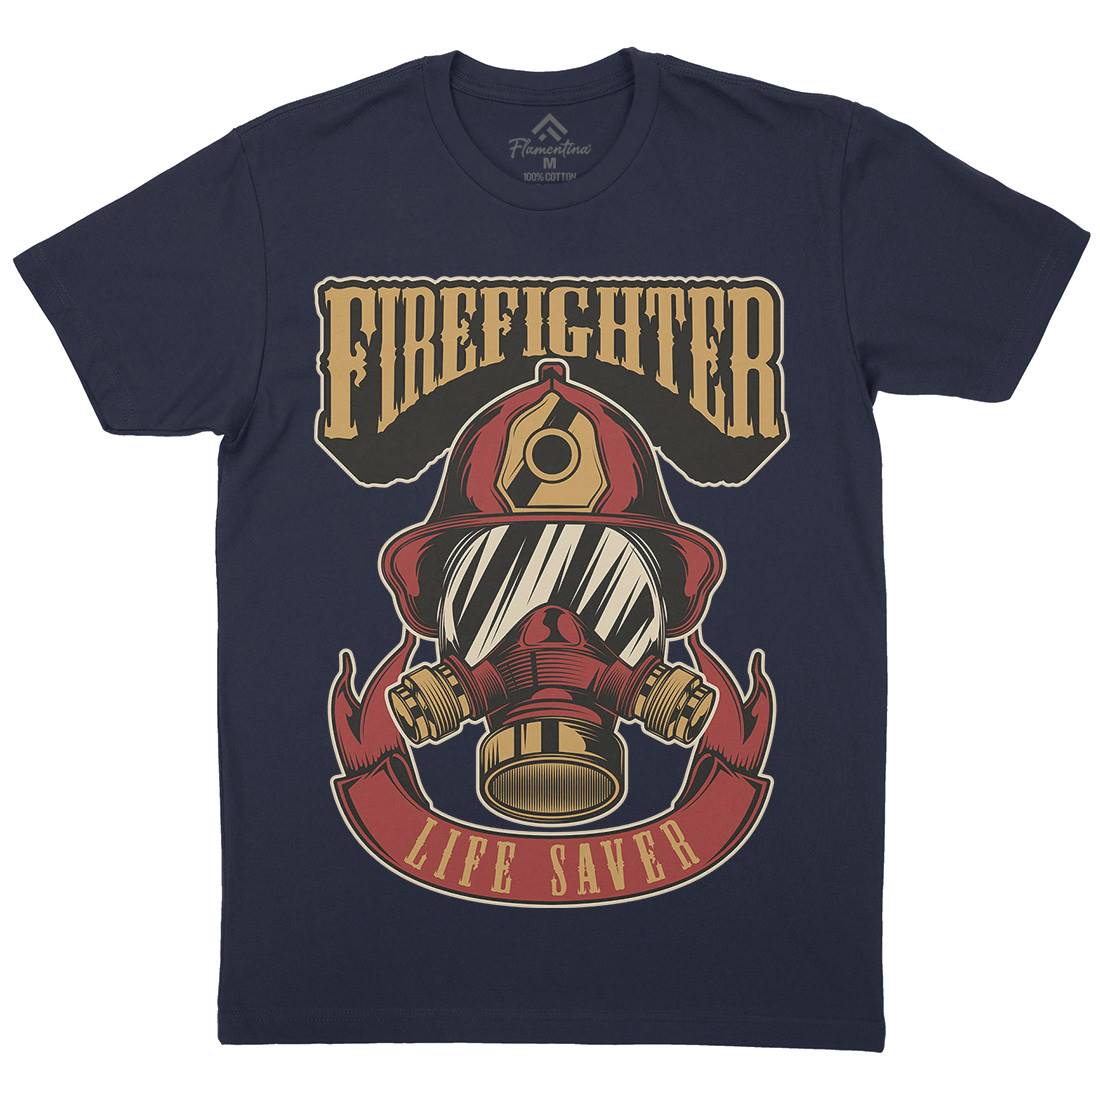 Life Saver Mens Crew Neck T-Shirt Firefighters C827